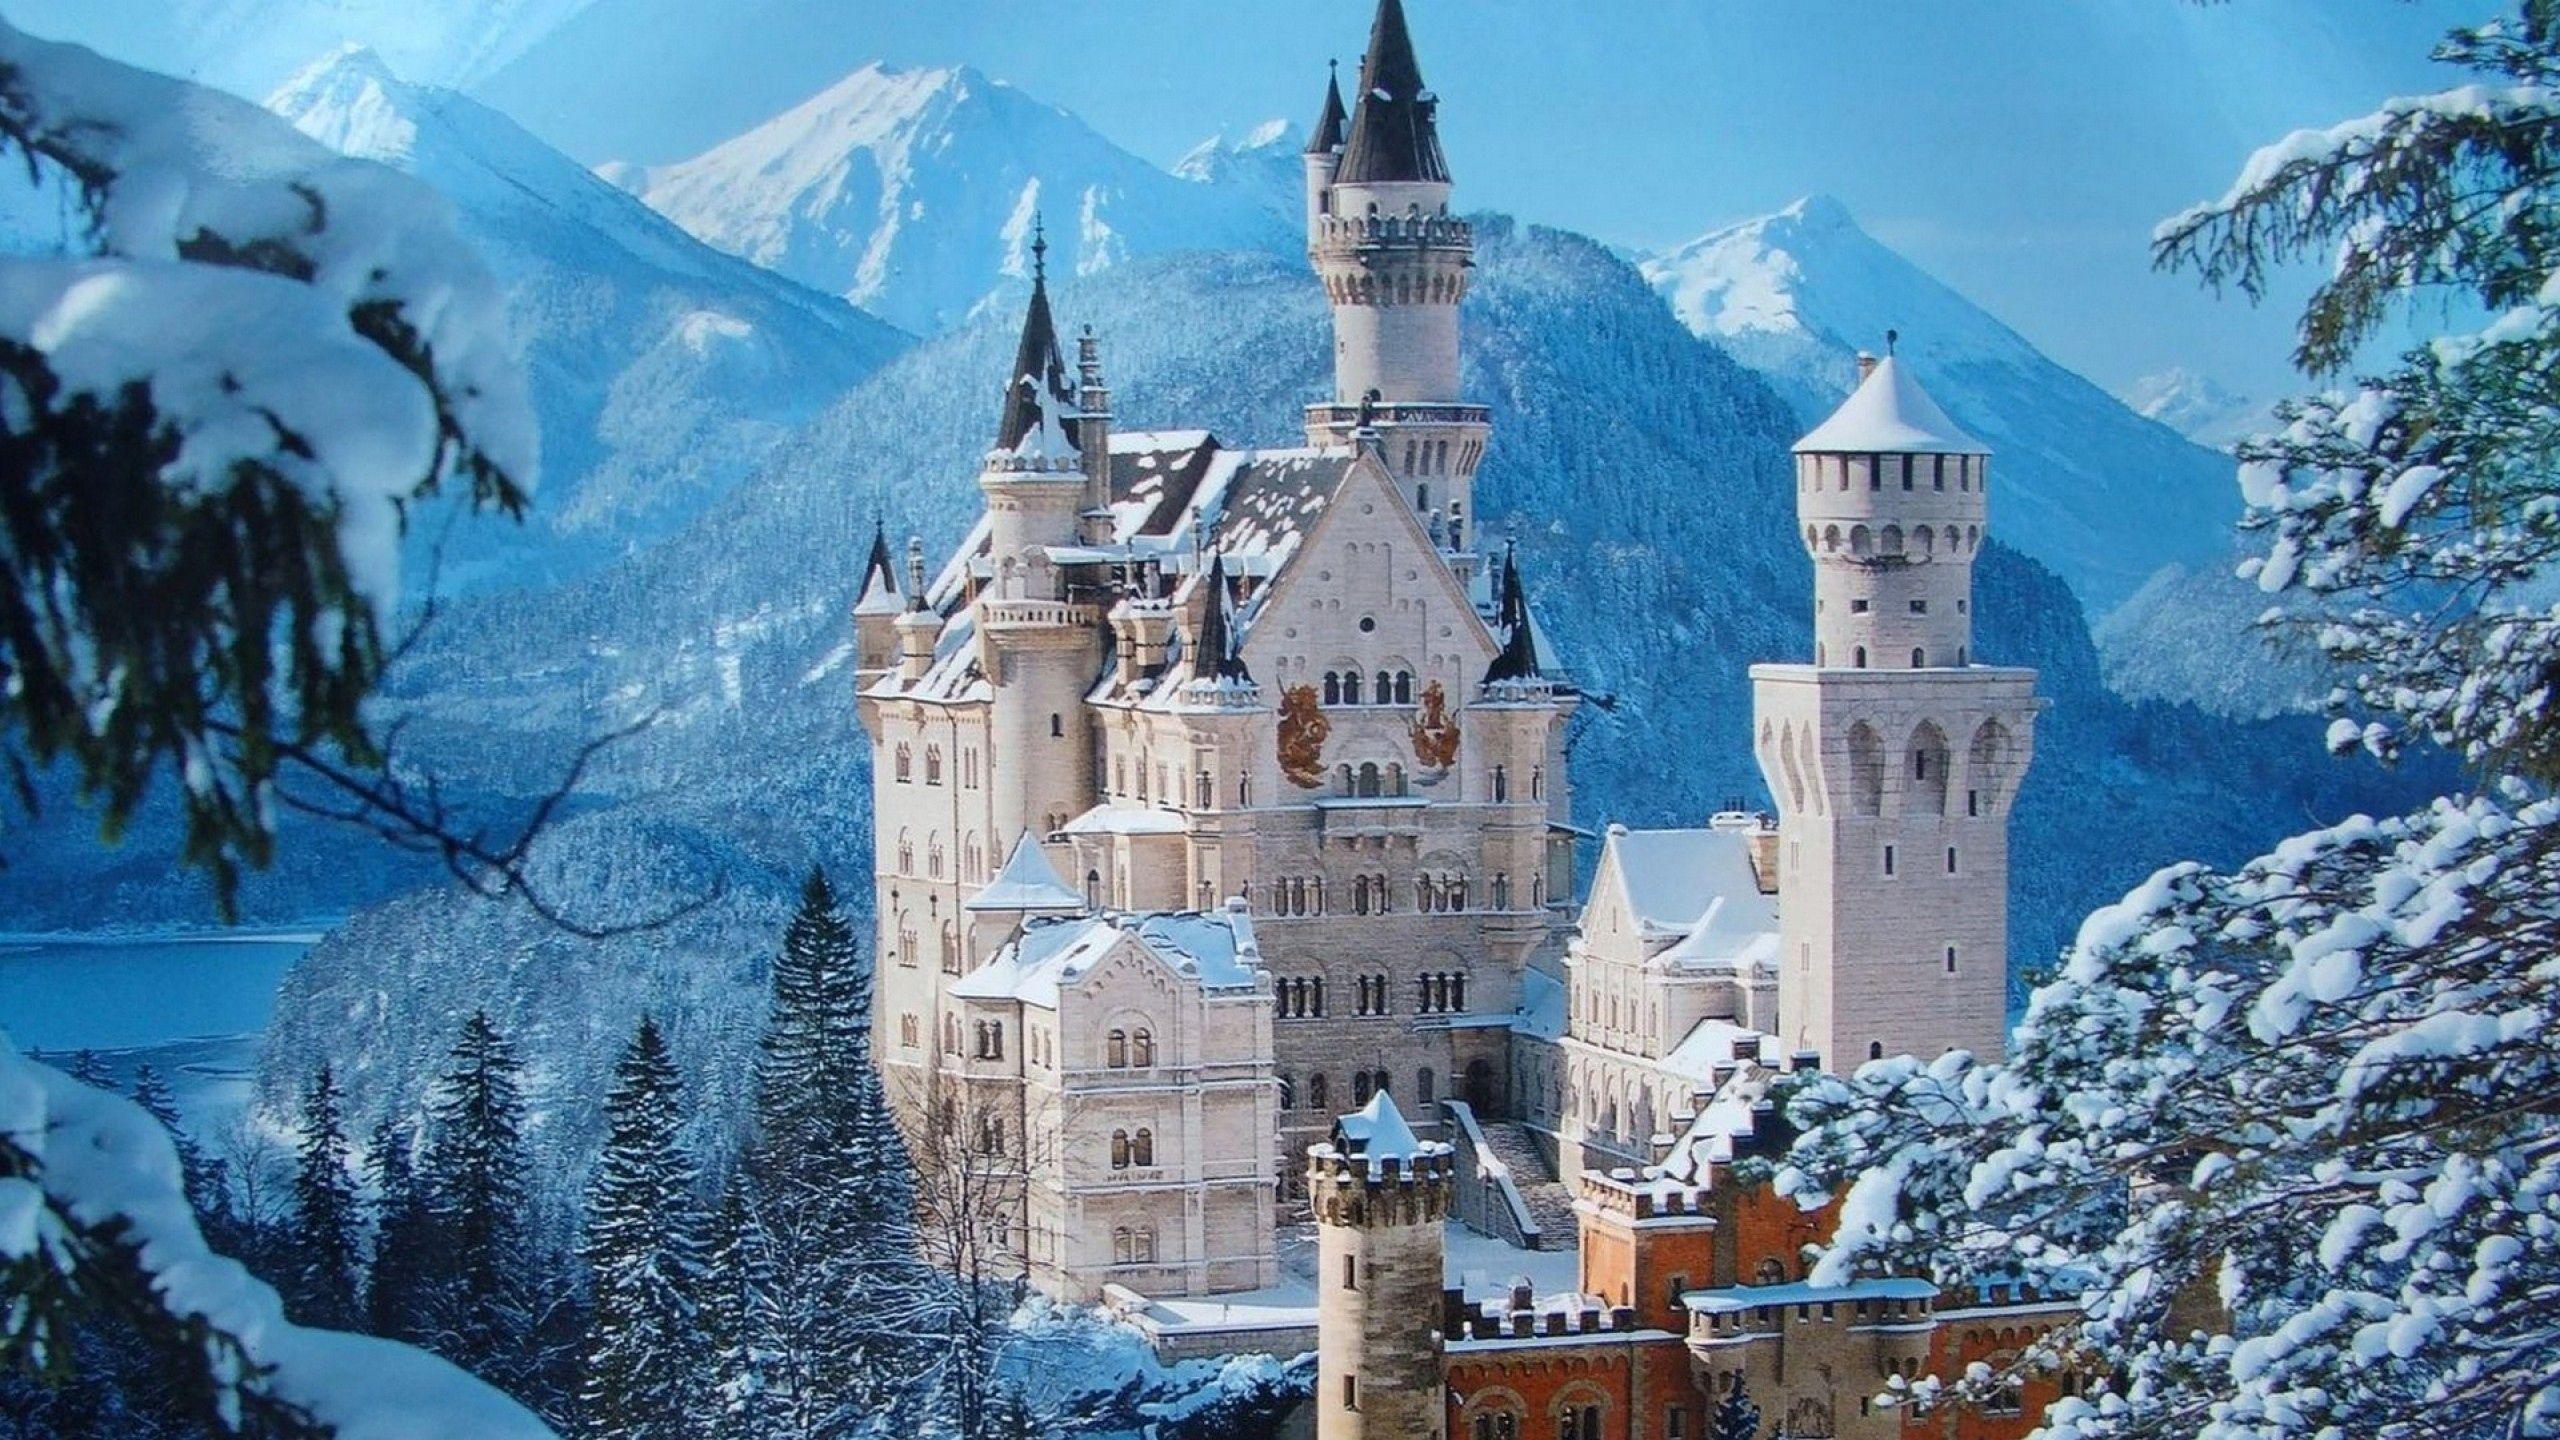 Download wallpaper 938x1668 neuschwanstein castle, bavaria, germany iphone  8/7/6s/6 for parallax hd background